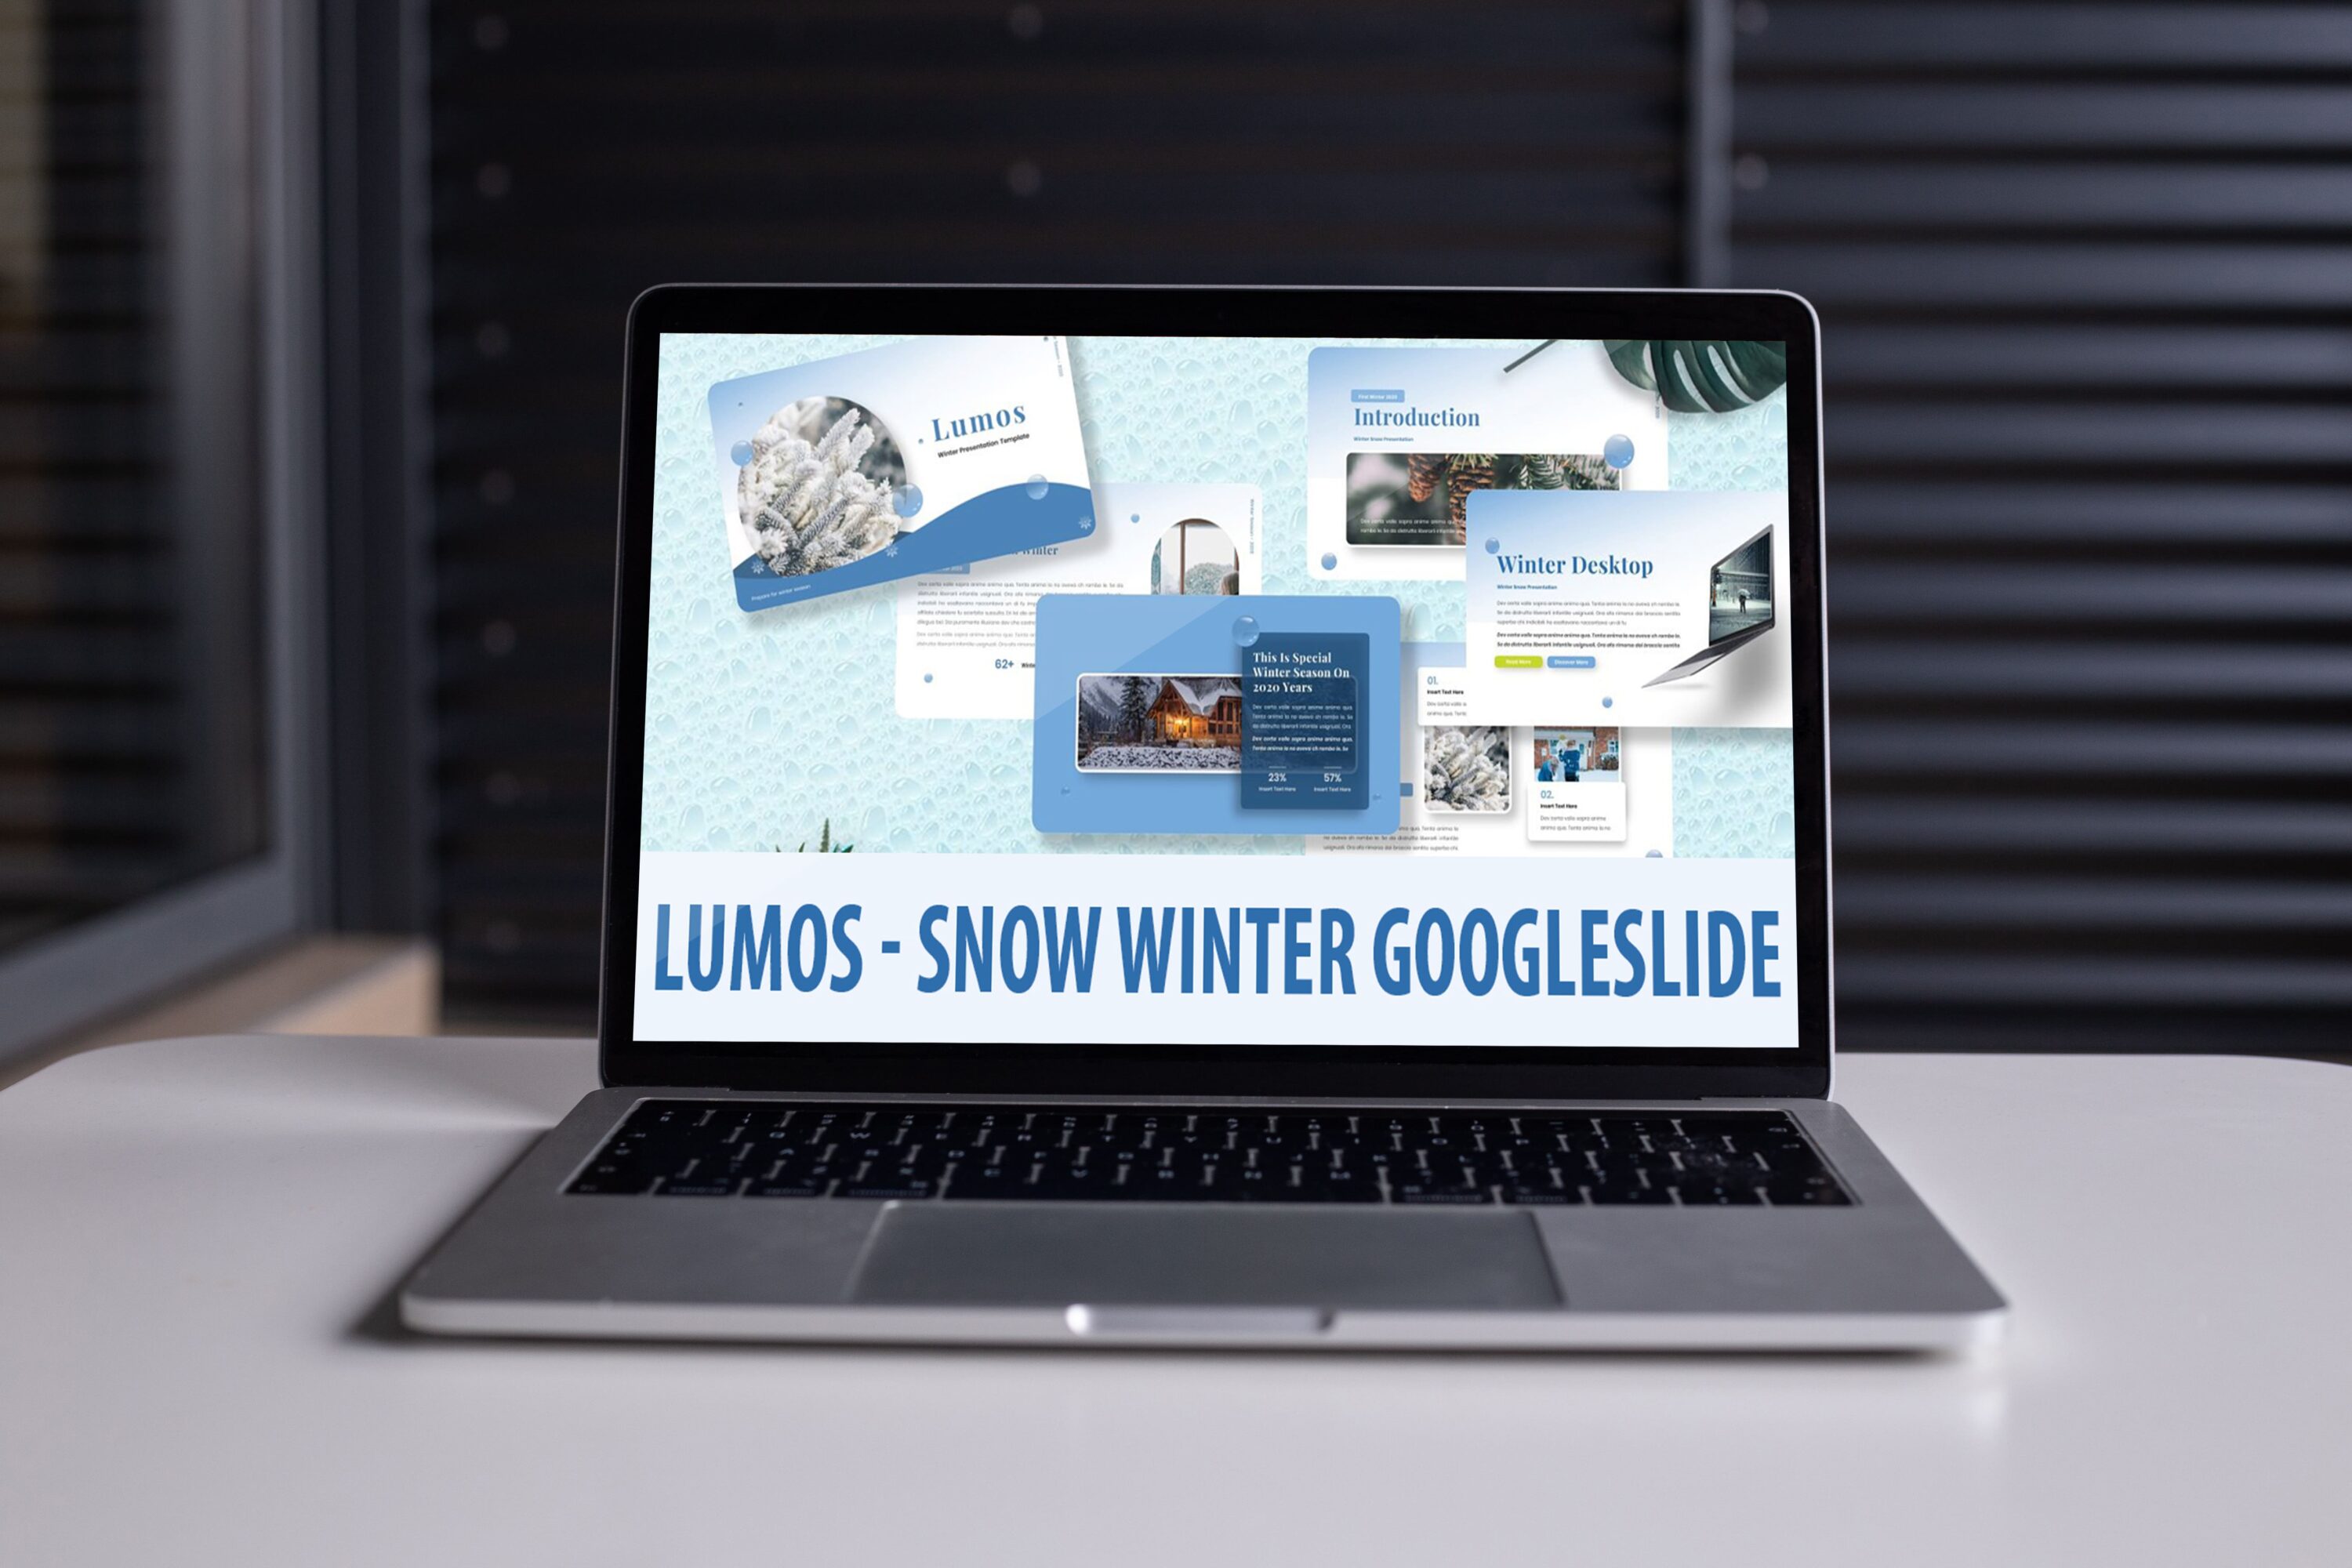 Laptop option of the Lumos - Snow Winter Googleslide.